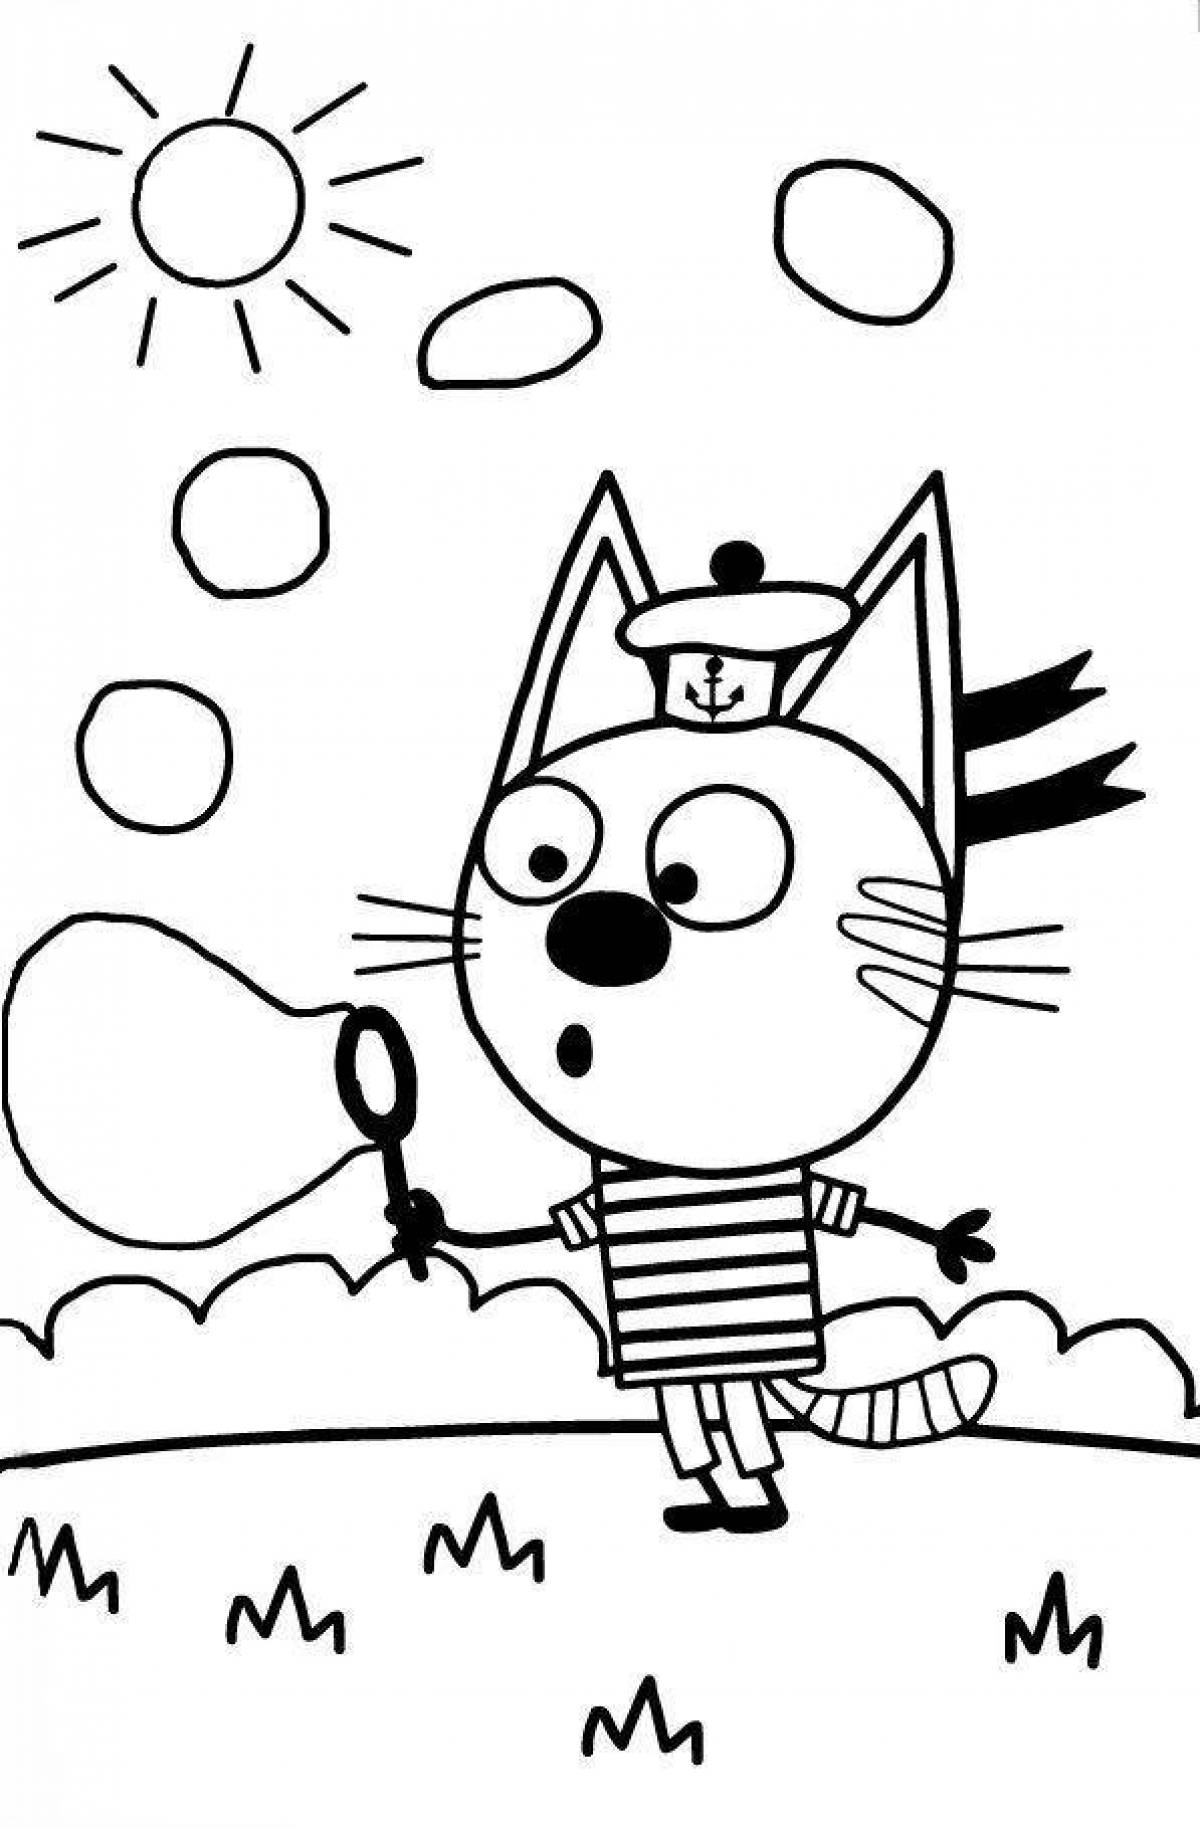 Jovial 3 cats coloring page для малышей